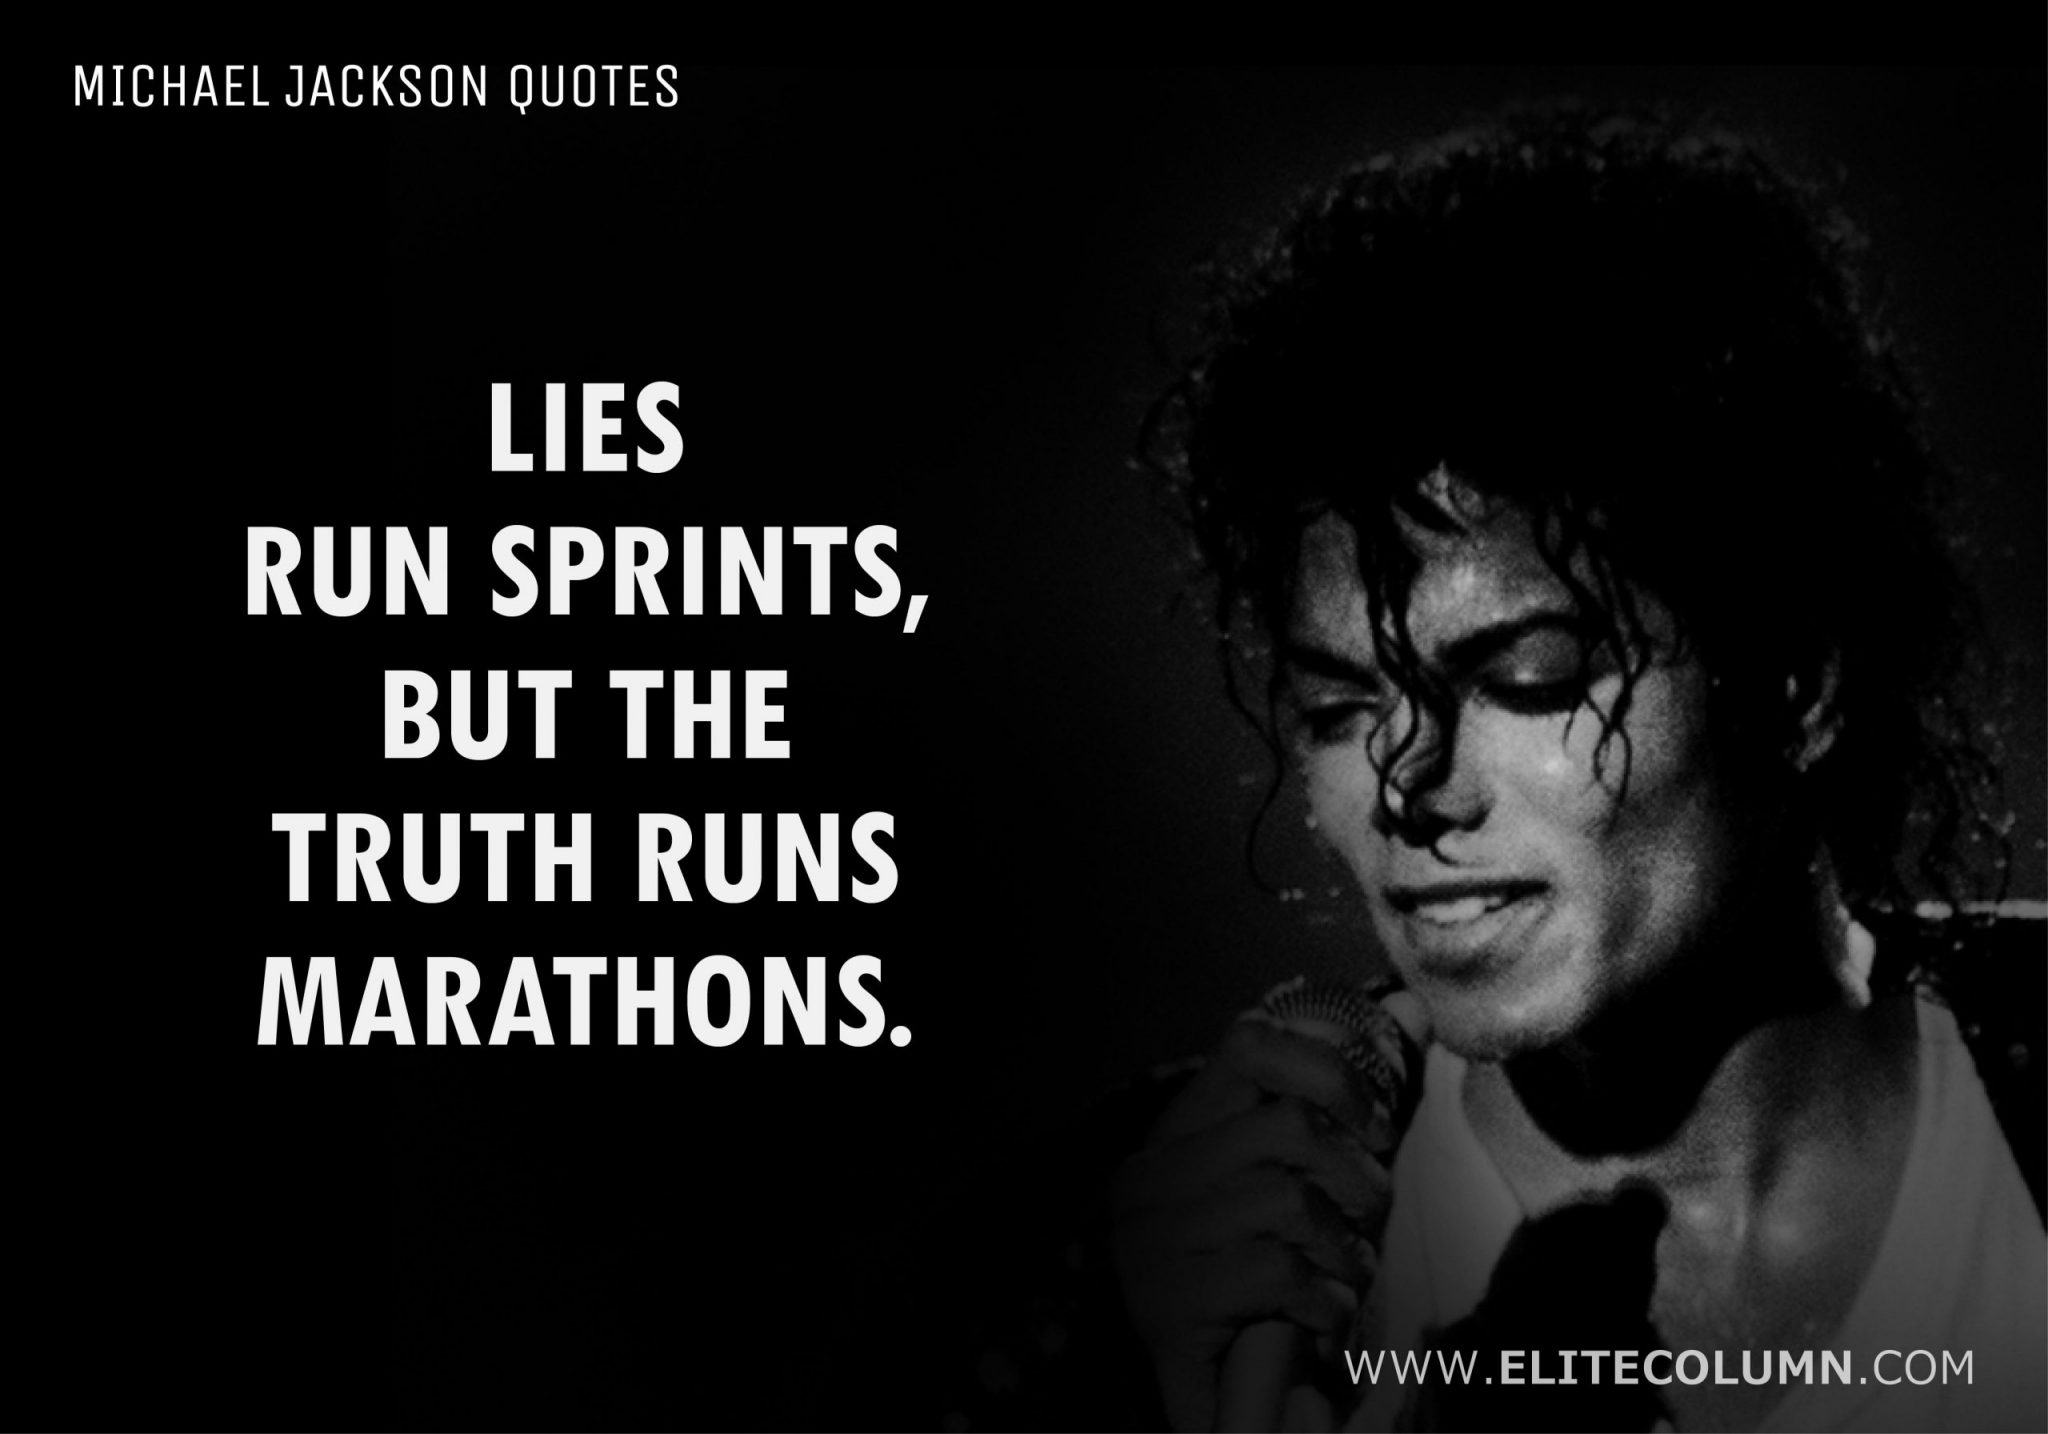 Michael Jackson Quotes (9)